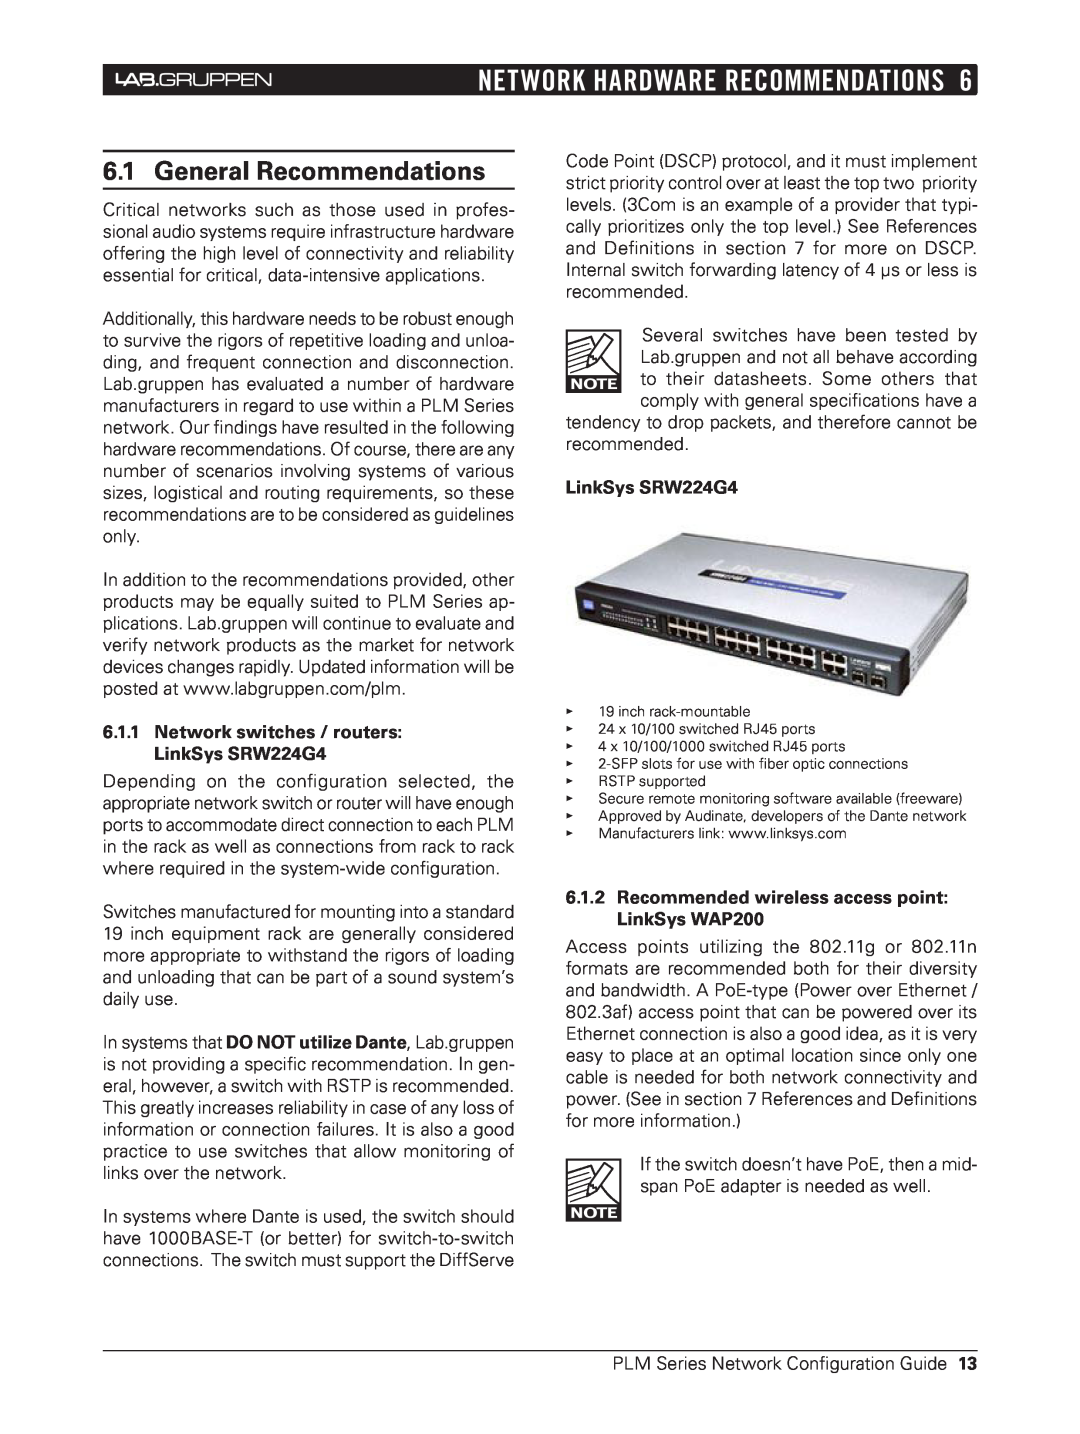 3Com NCG-PLM Network Hardware Recommendations, General Recommendations, 6.1.1Network switches / routers LinkSys SRW224G4 